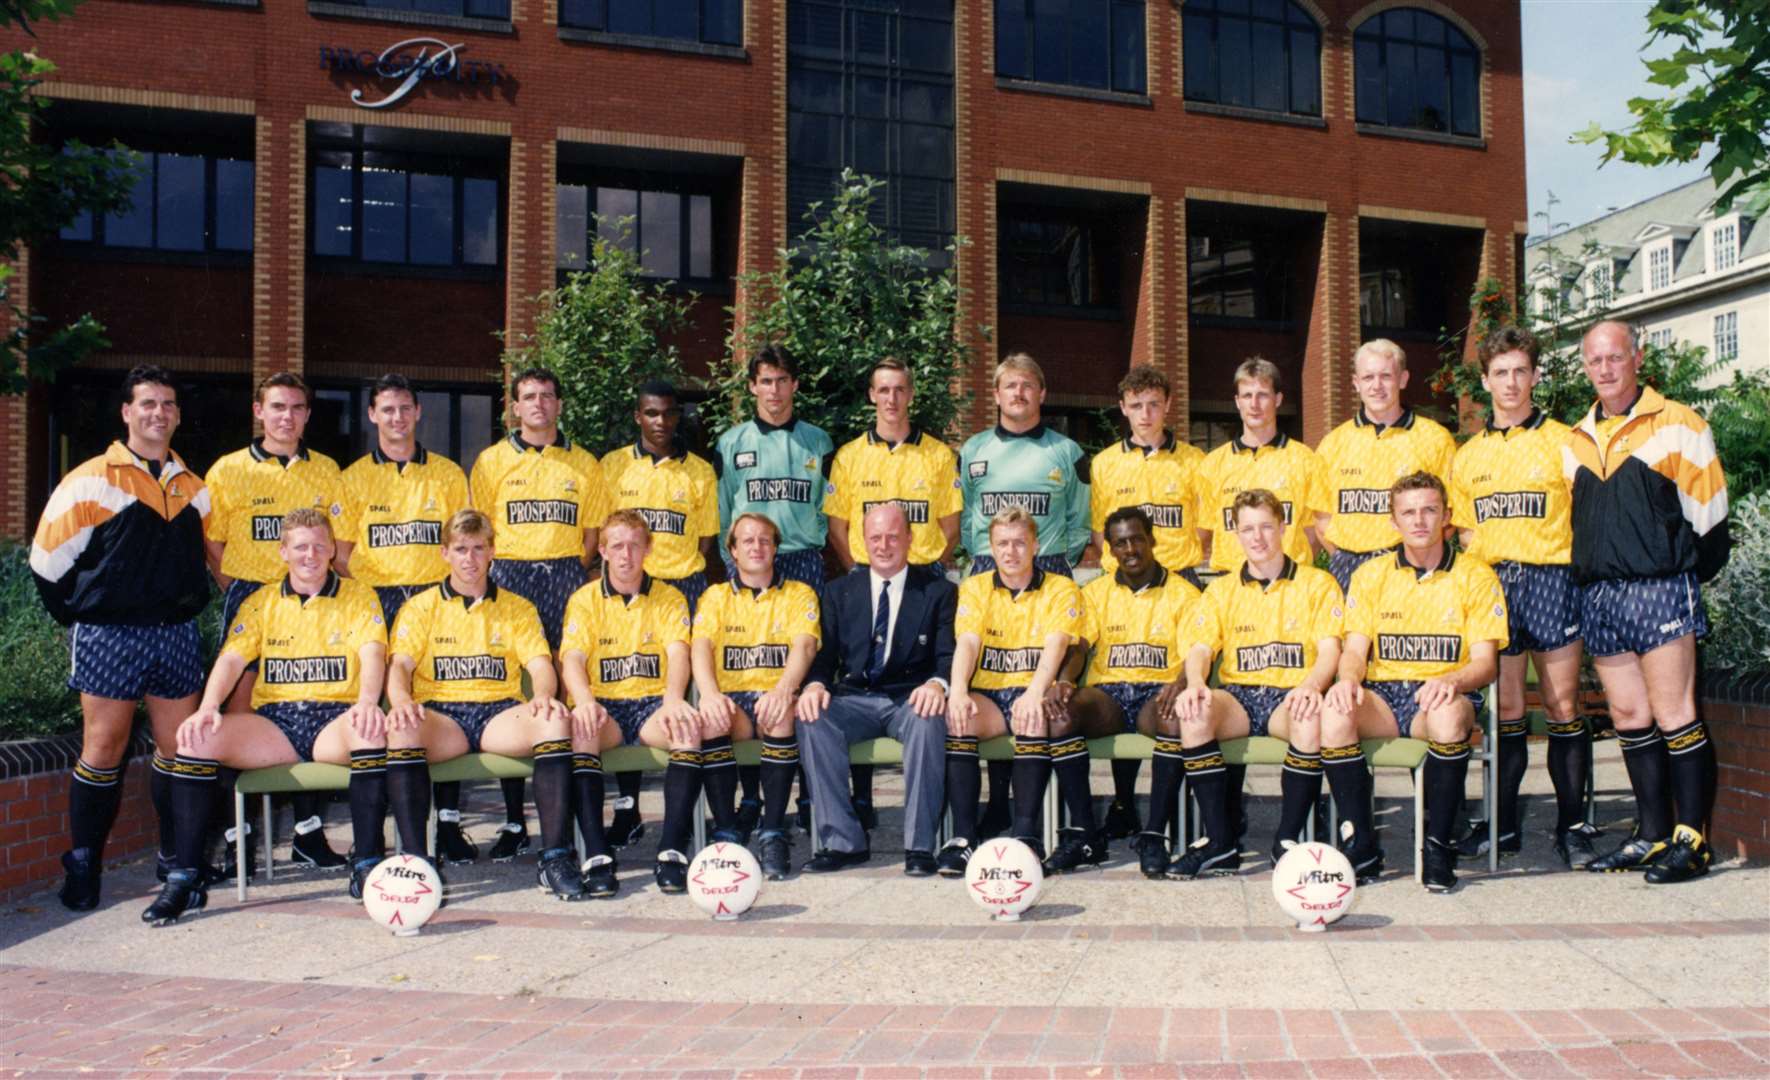 Maidstone United's 1991/92 squad - their final season as a Football League club before going bust